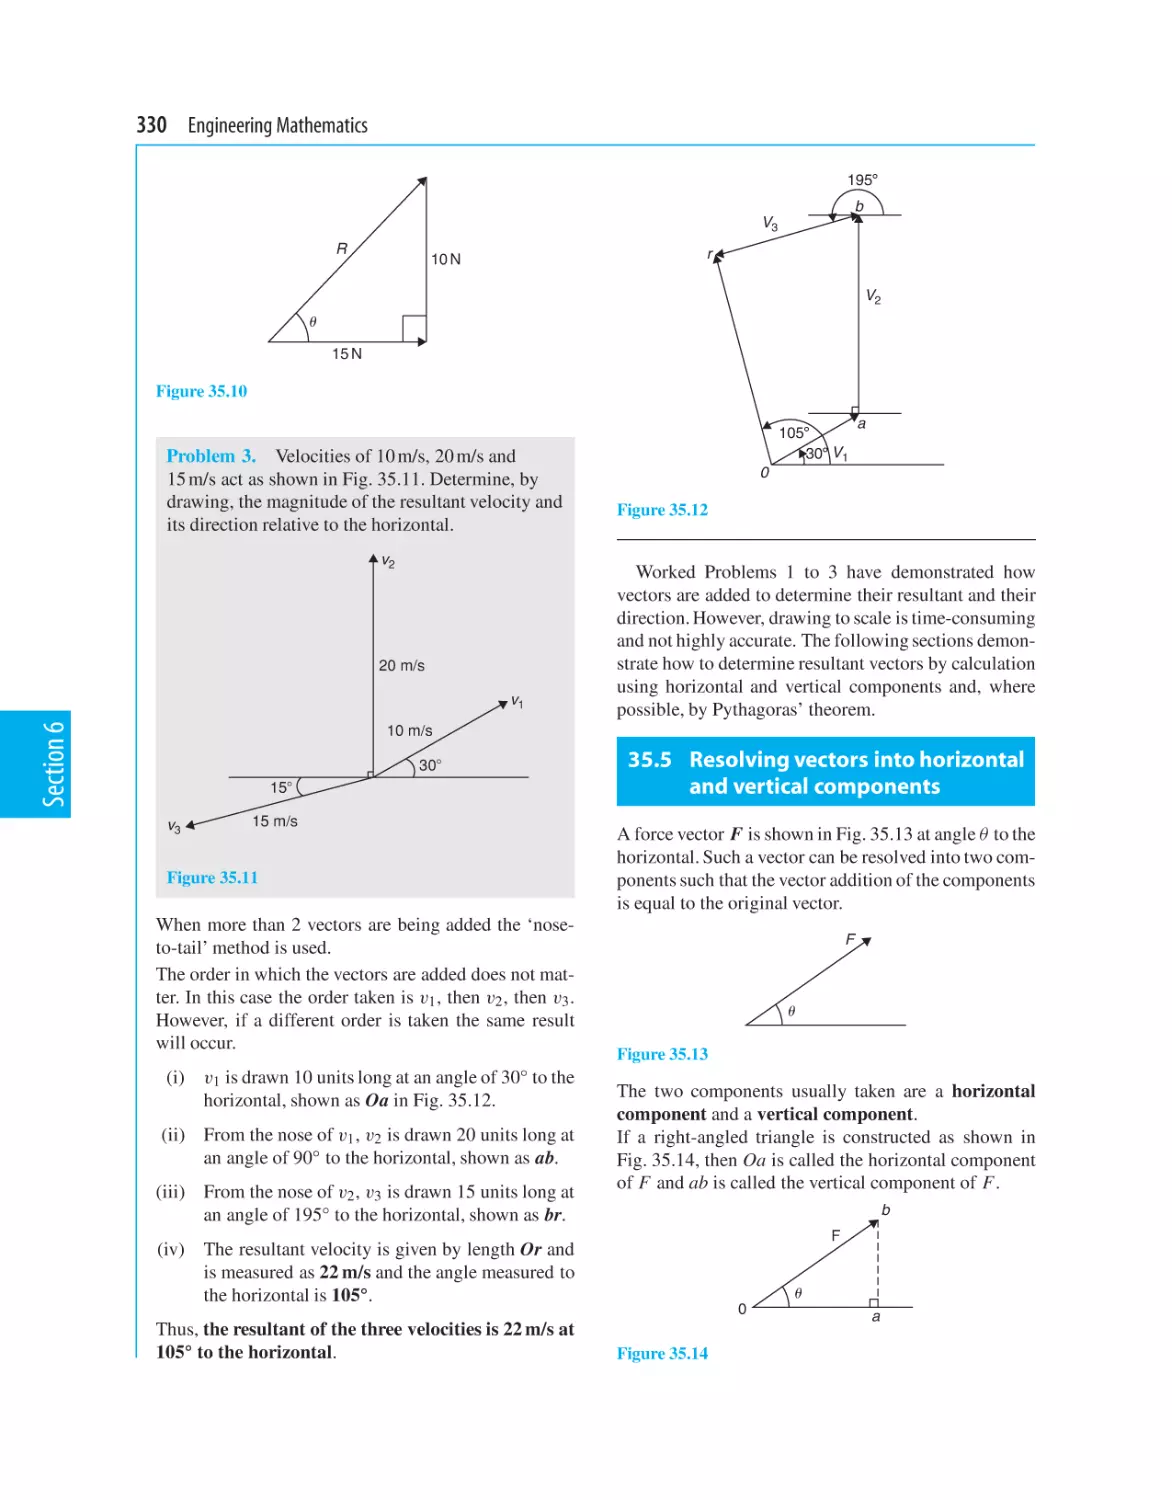 35.5 Resolving vectors into horizontal and vertical components